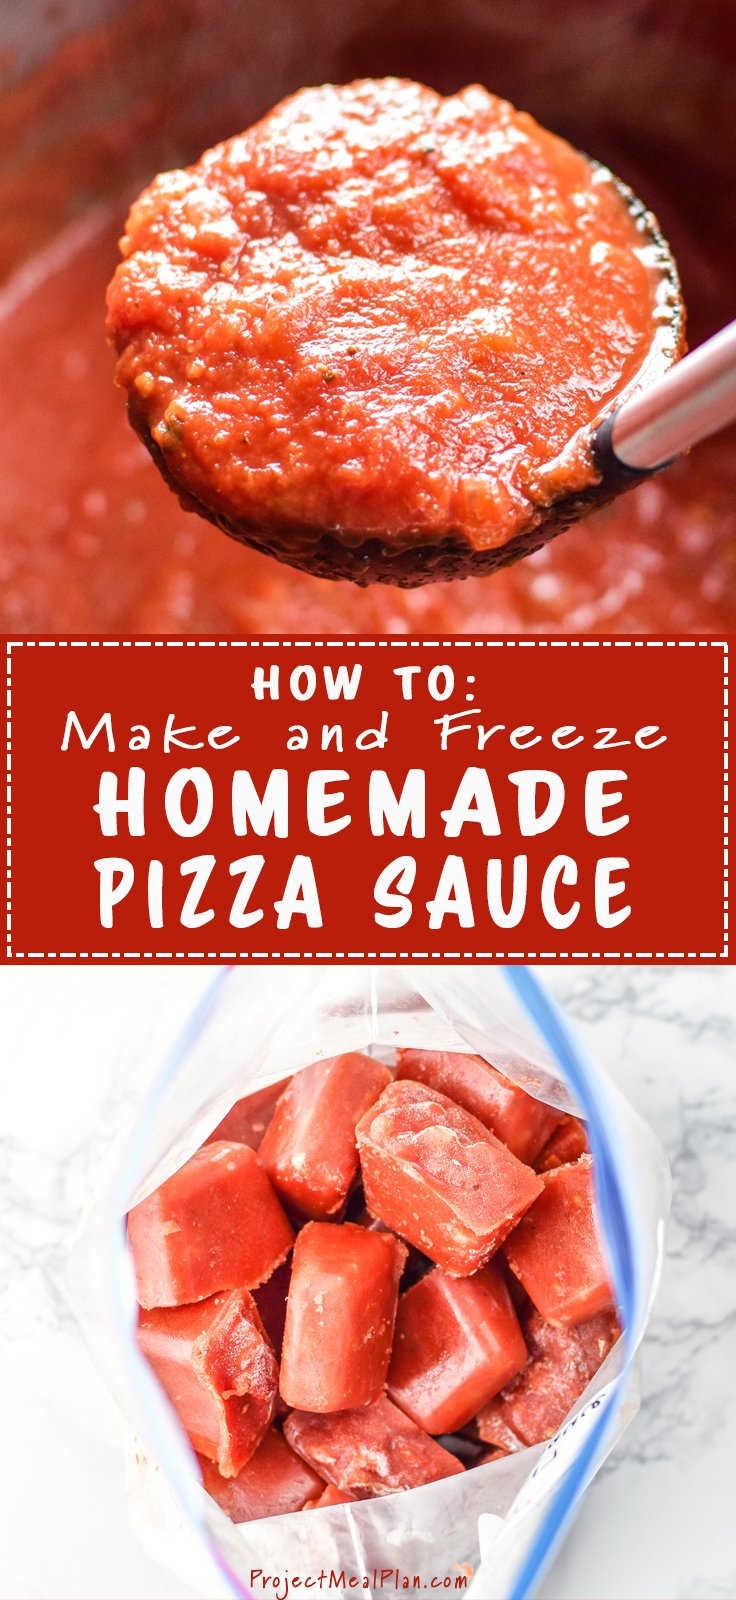 How to Make and Freeze Homemade Pizza Sauce - Big batch pizza sauce recipe to prep so you can have homemade pizza sauce in 10 minutes, anytime! - ProjectMealPlan.com